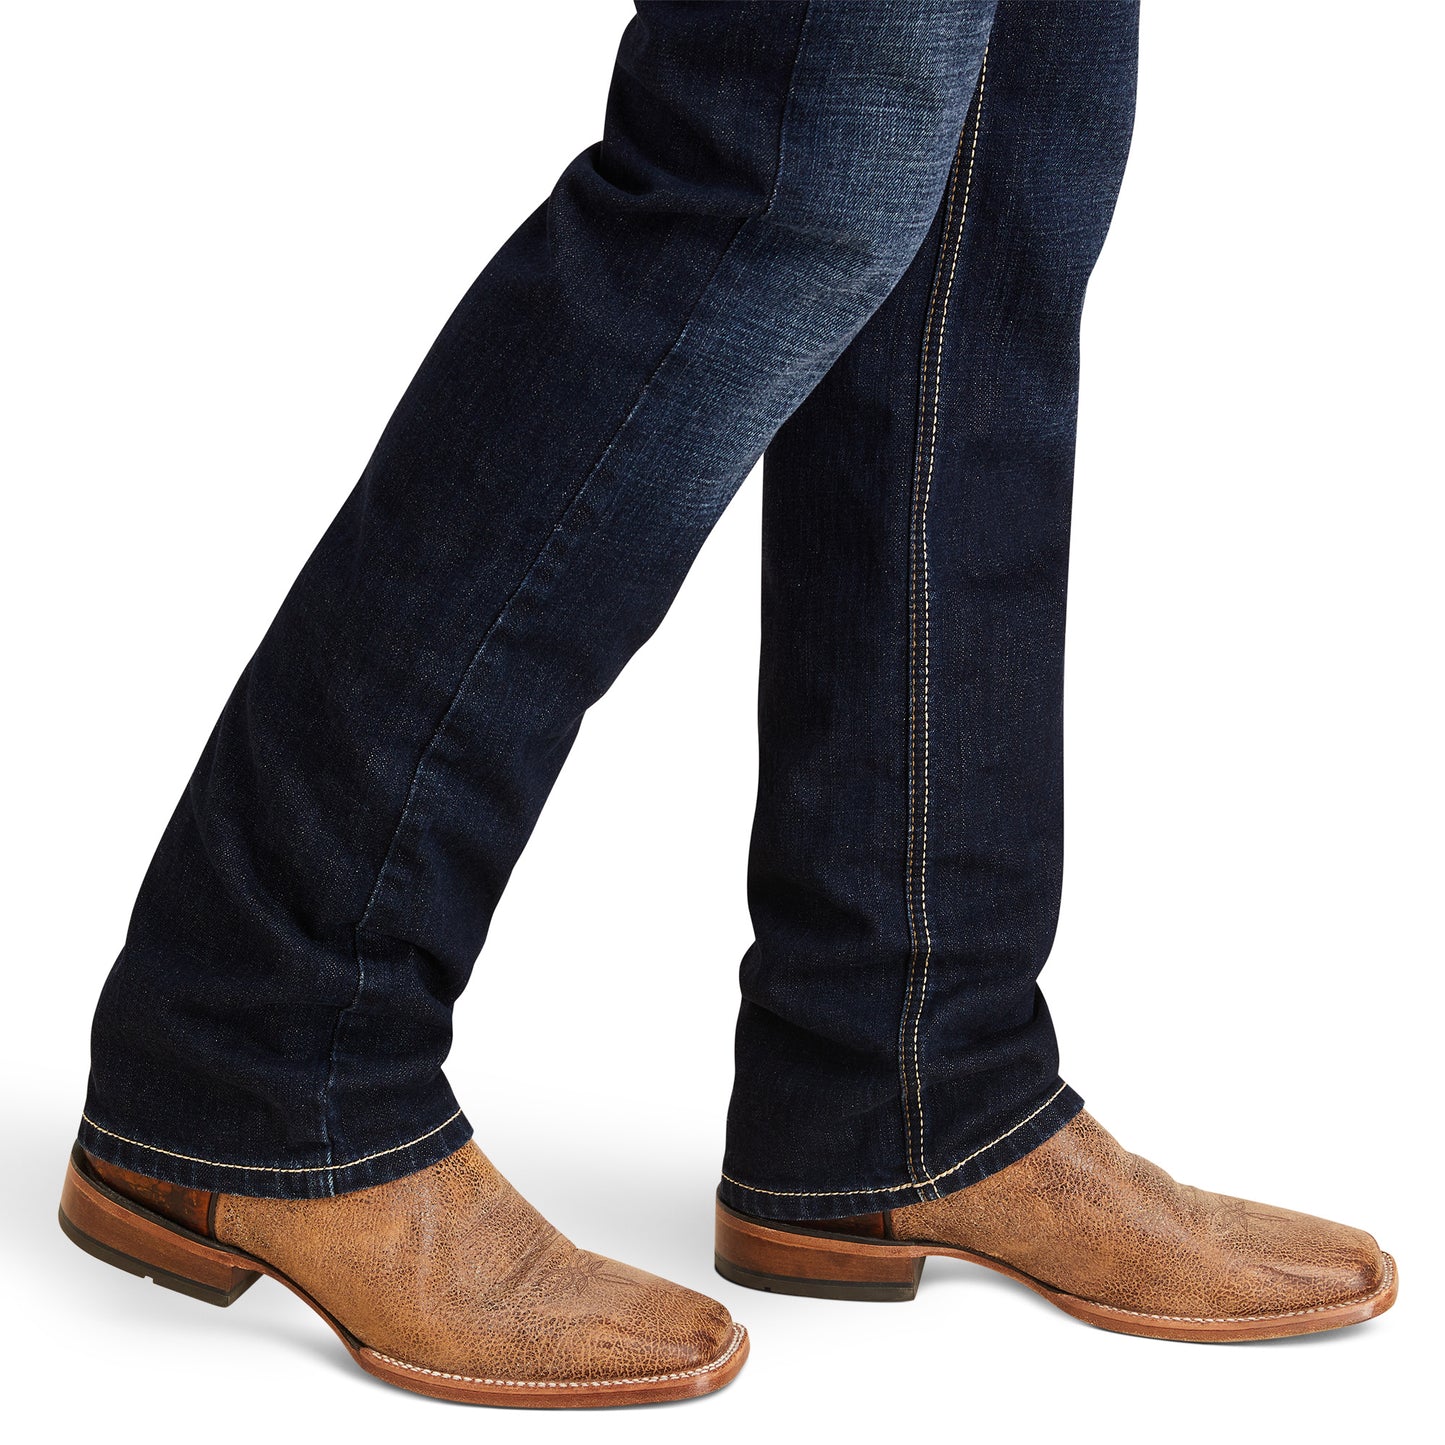 Ariat Men M7 Slim Treven Straight Jean